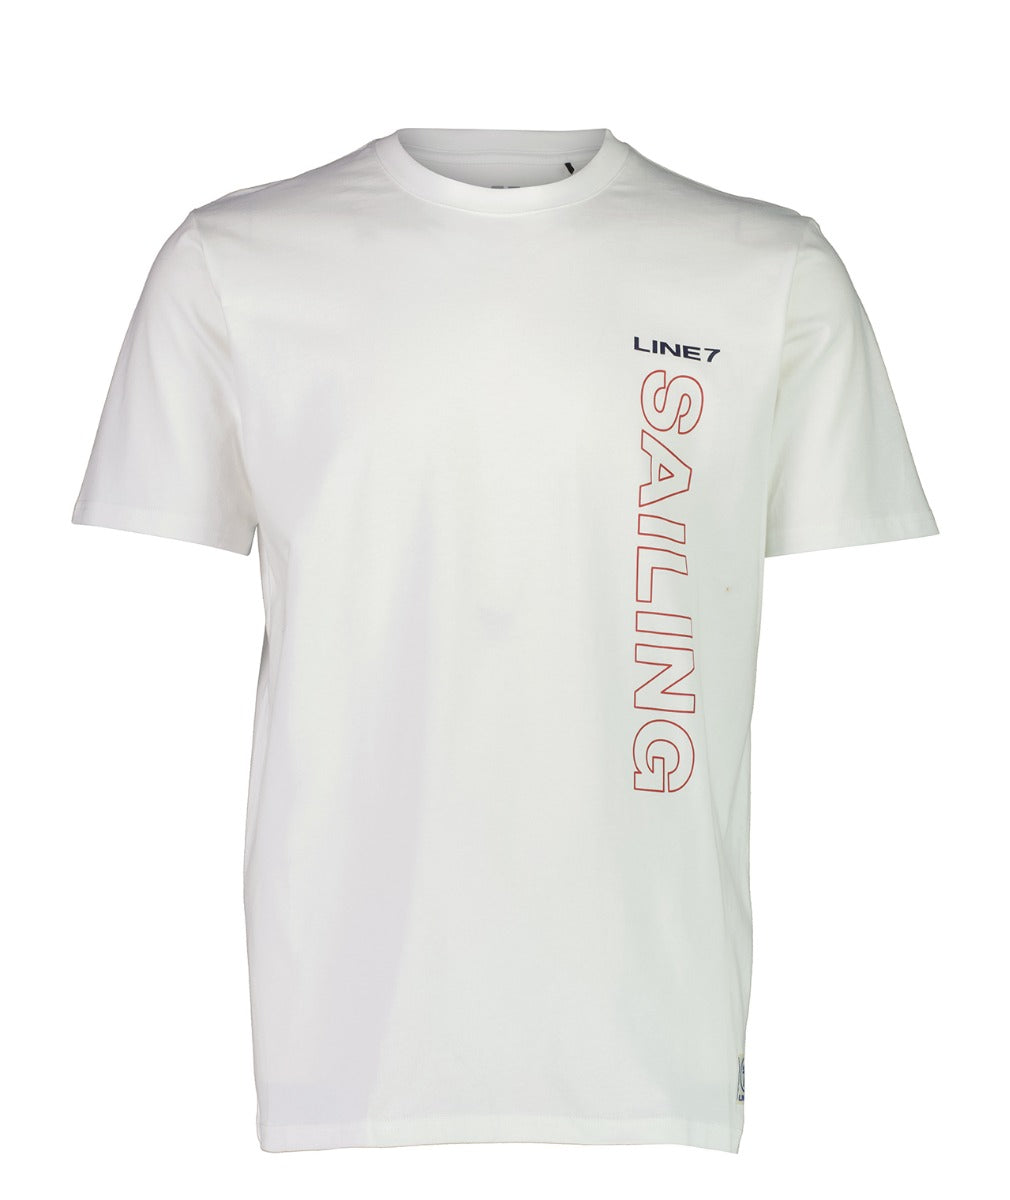 line-7-men-s-sailing-t-shirt_2.jpg